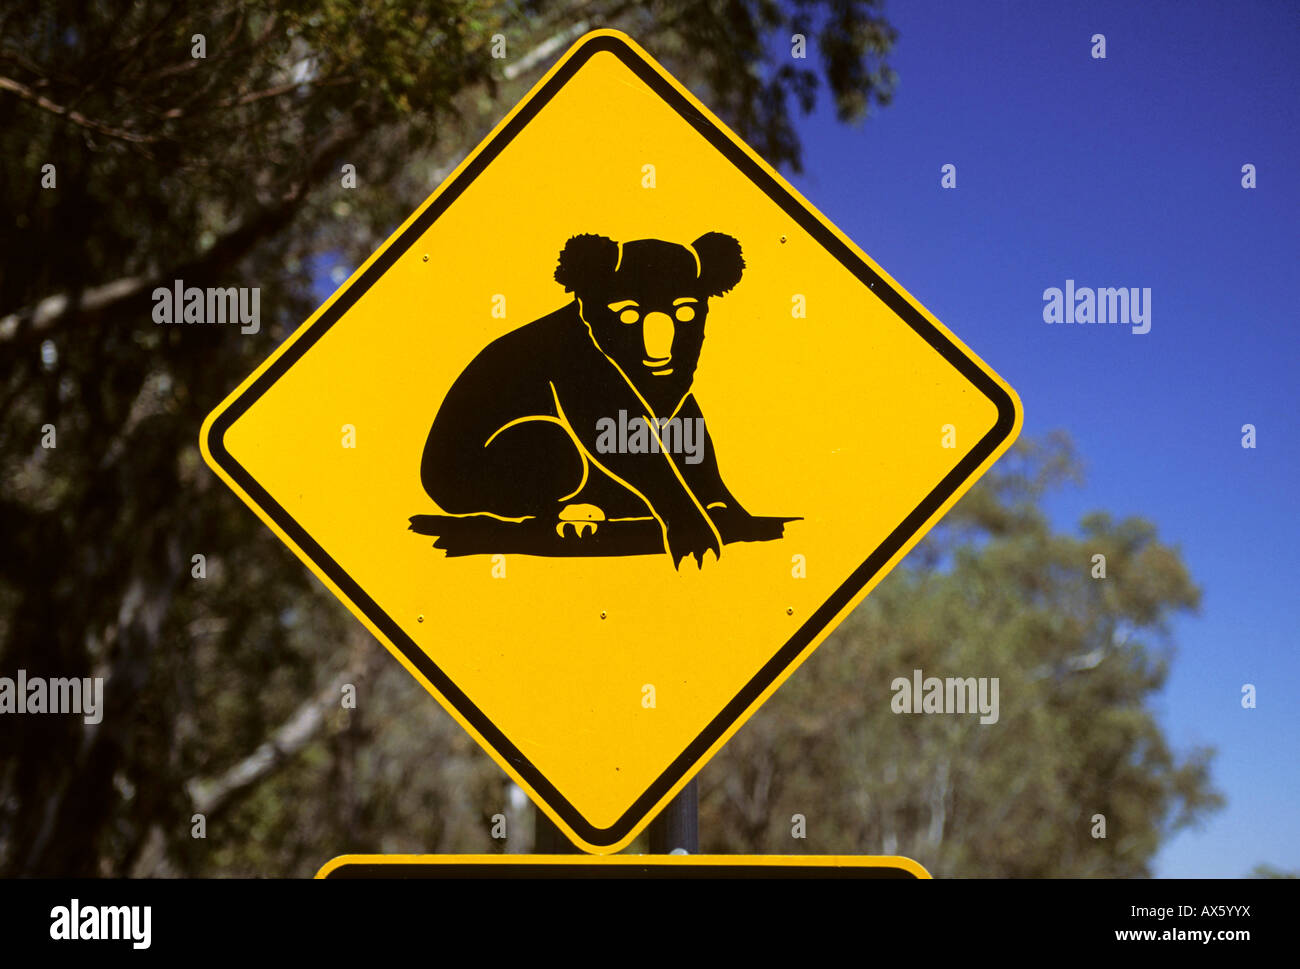 Koala crossing sign, Queensland, Australia Stock Photo